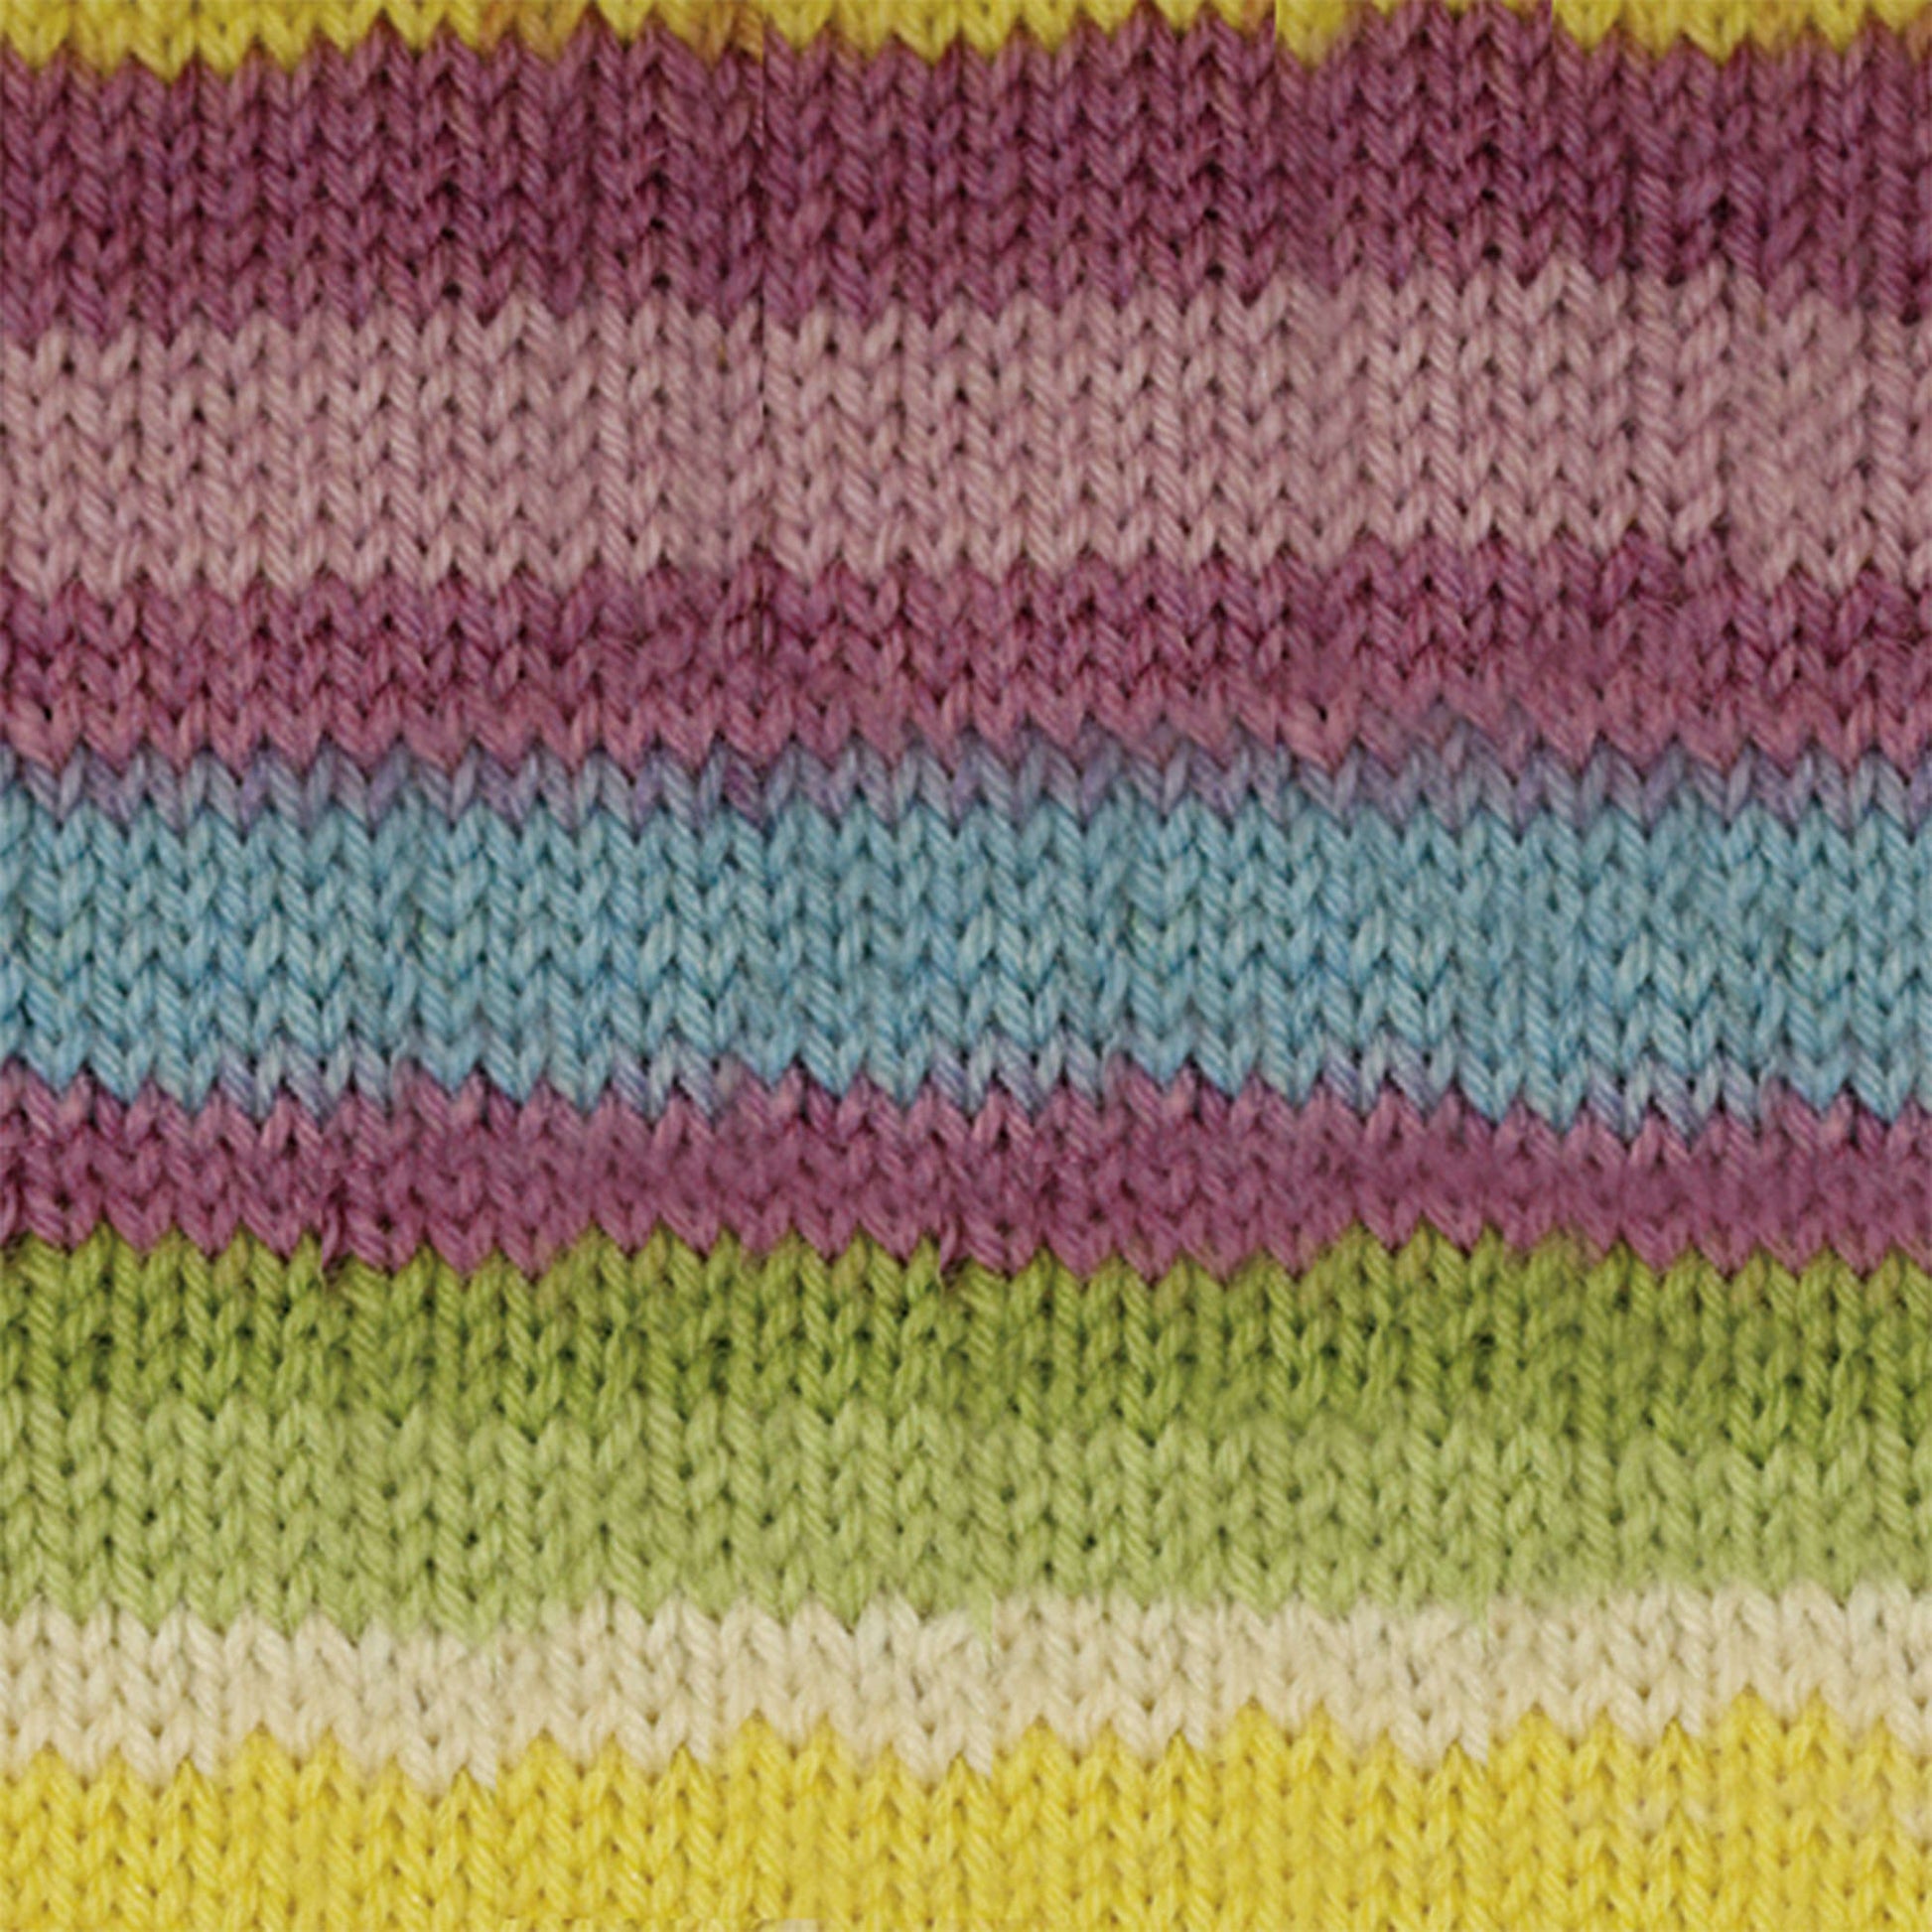 Patons Kroy Socks Yarn - Discontinued Shades Sweet Stripes